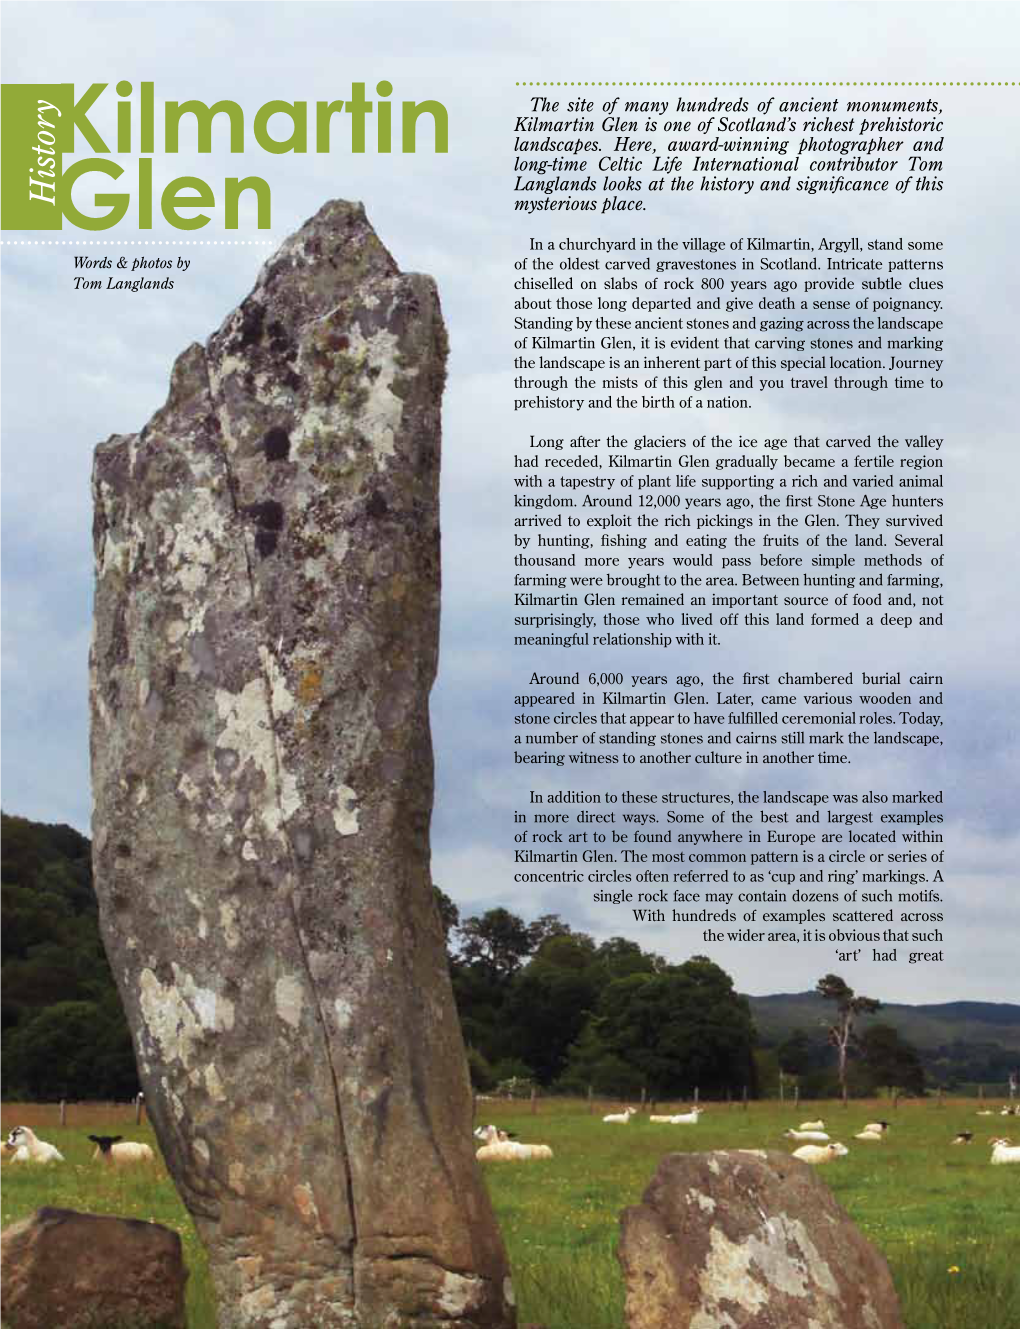 Kilmartin Glen Is One of Scotland’S Richest Prehistoric Kilmartin Landscapes